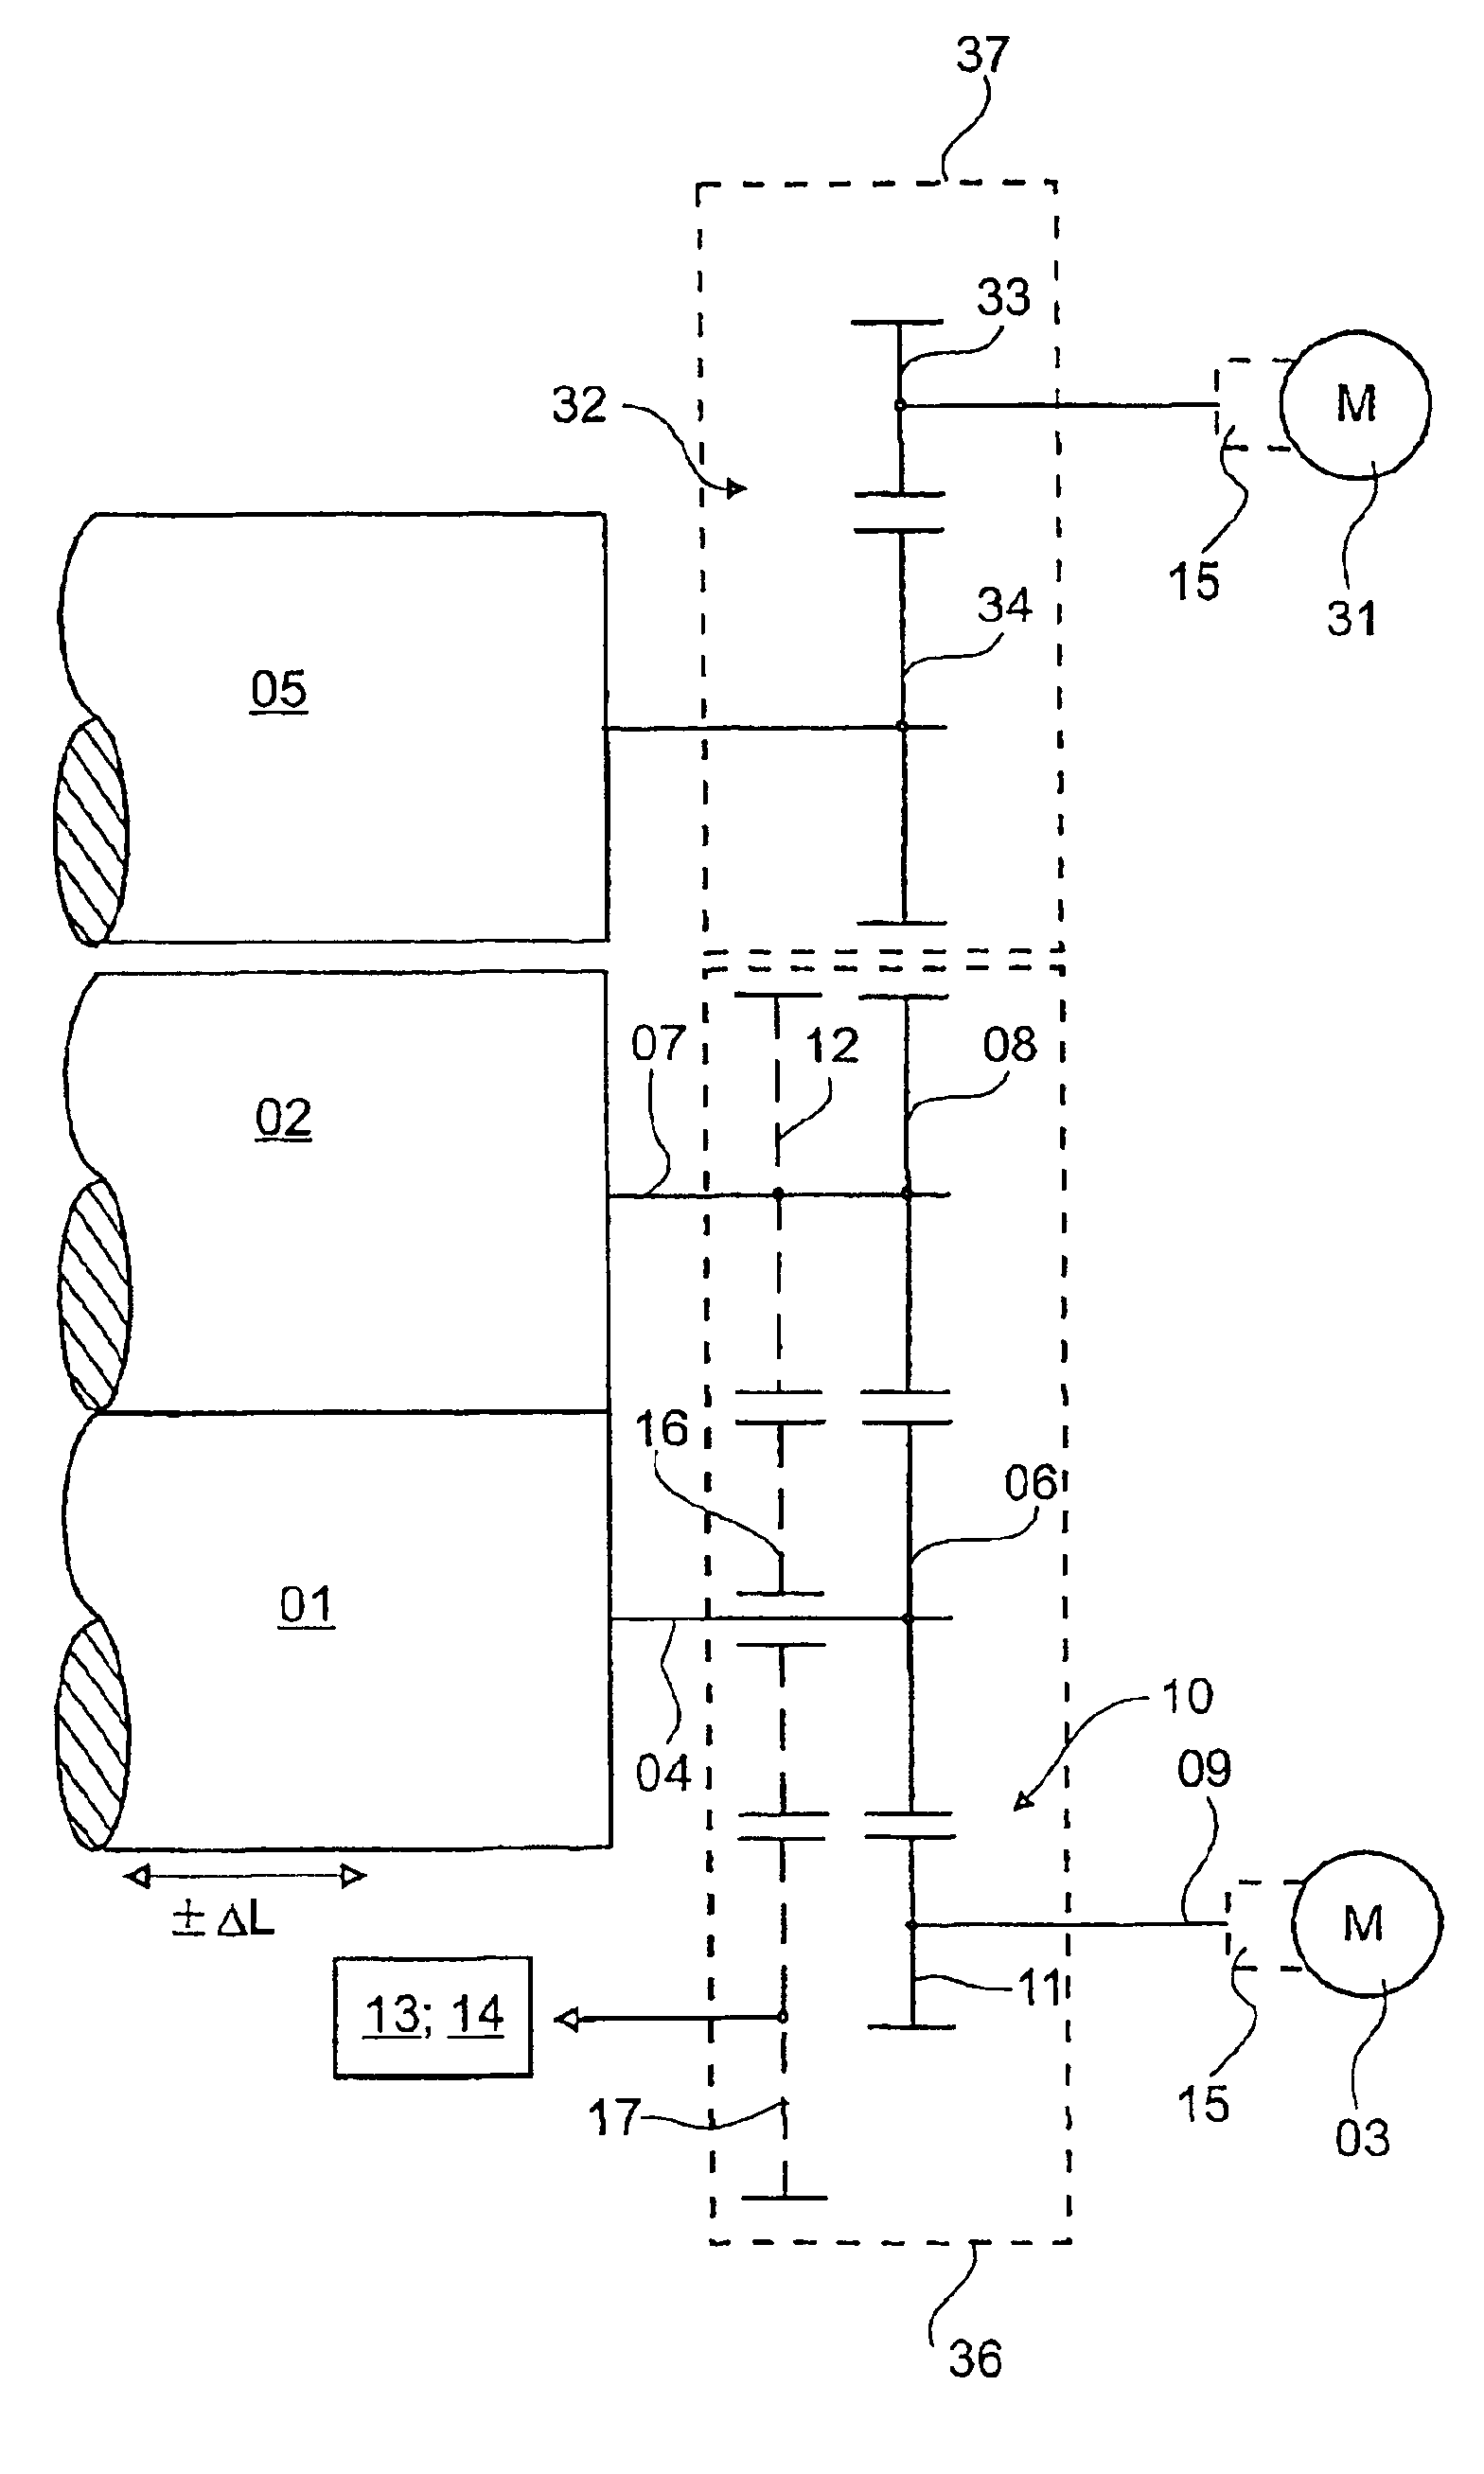 Drive mechanism of a printing unit